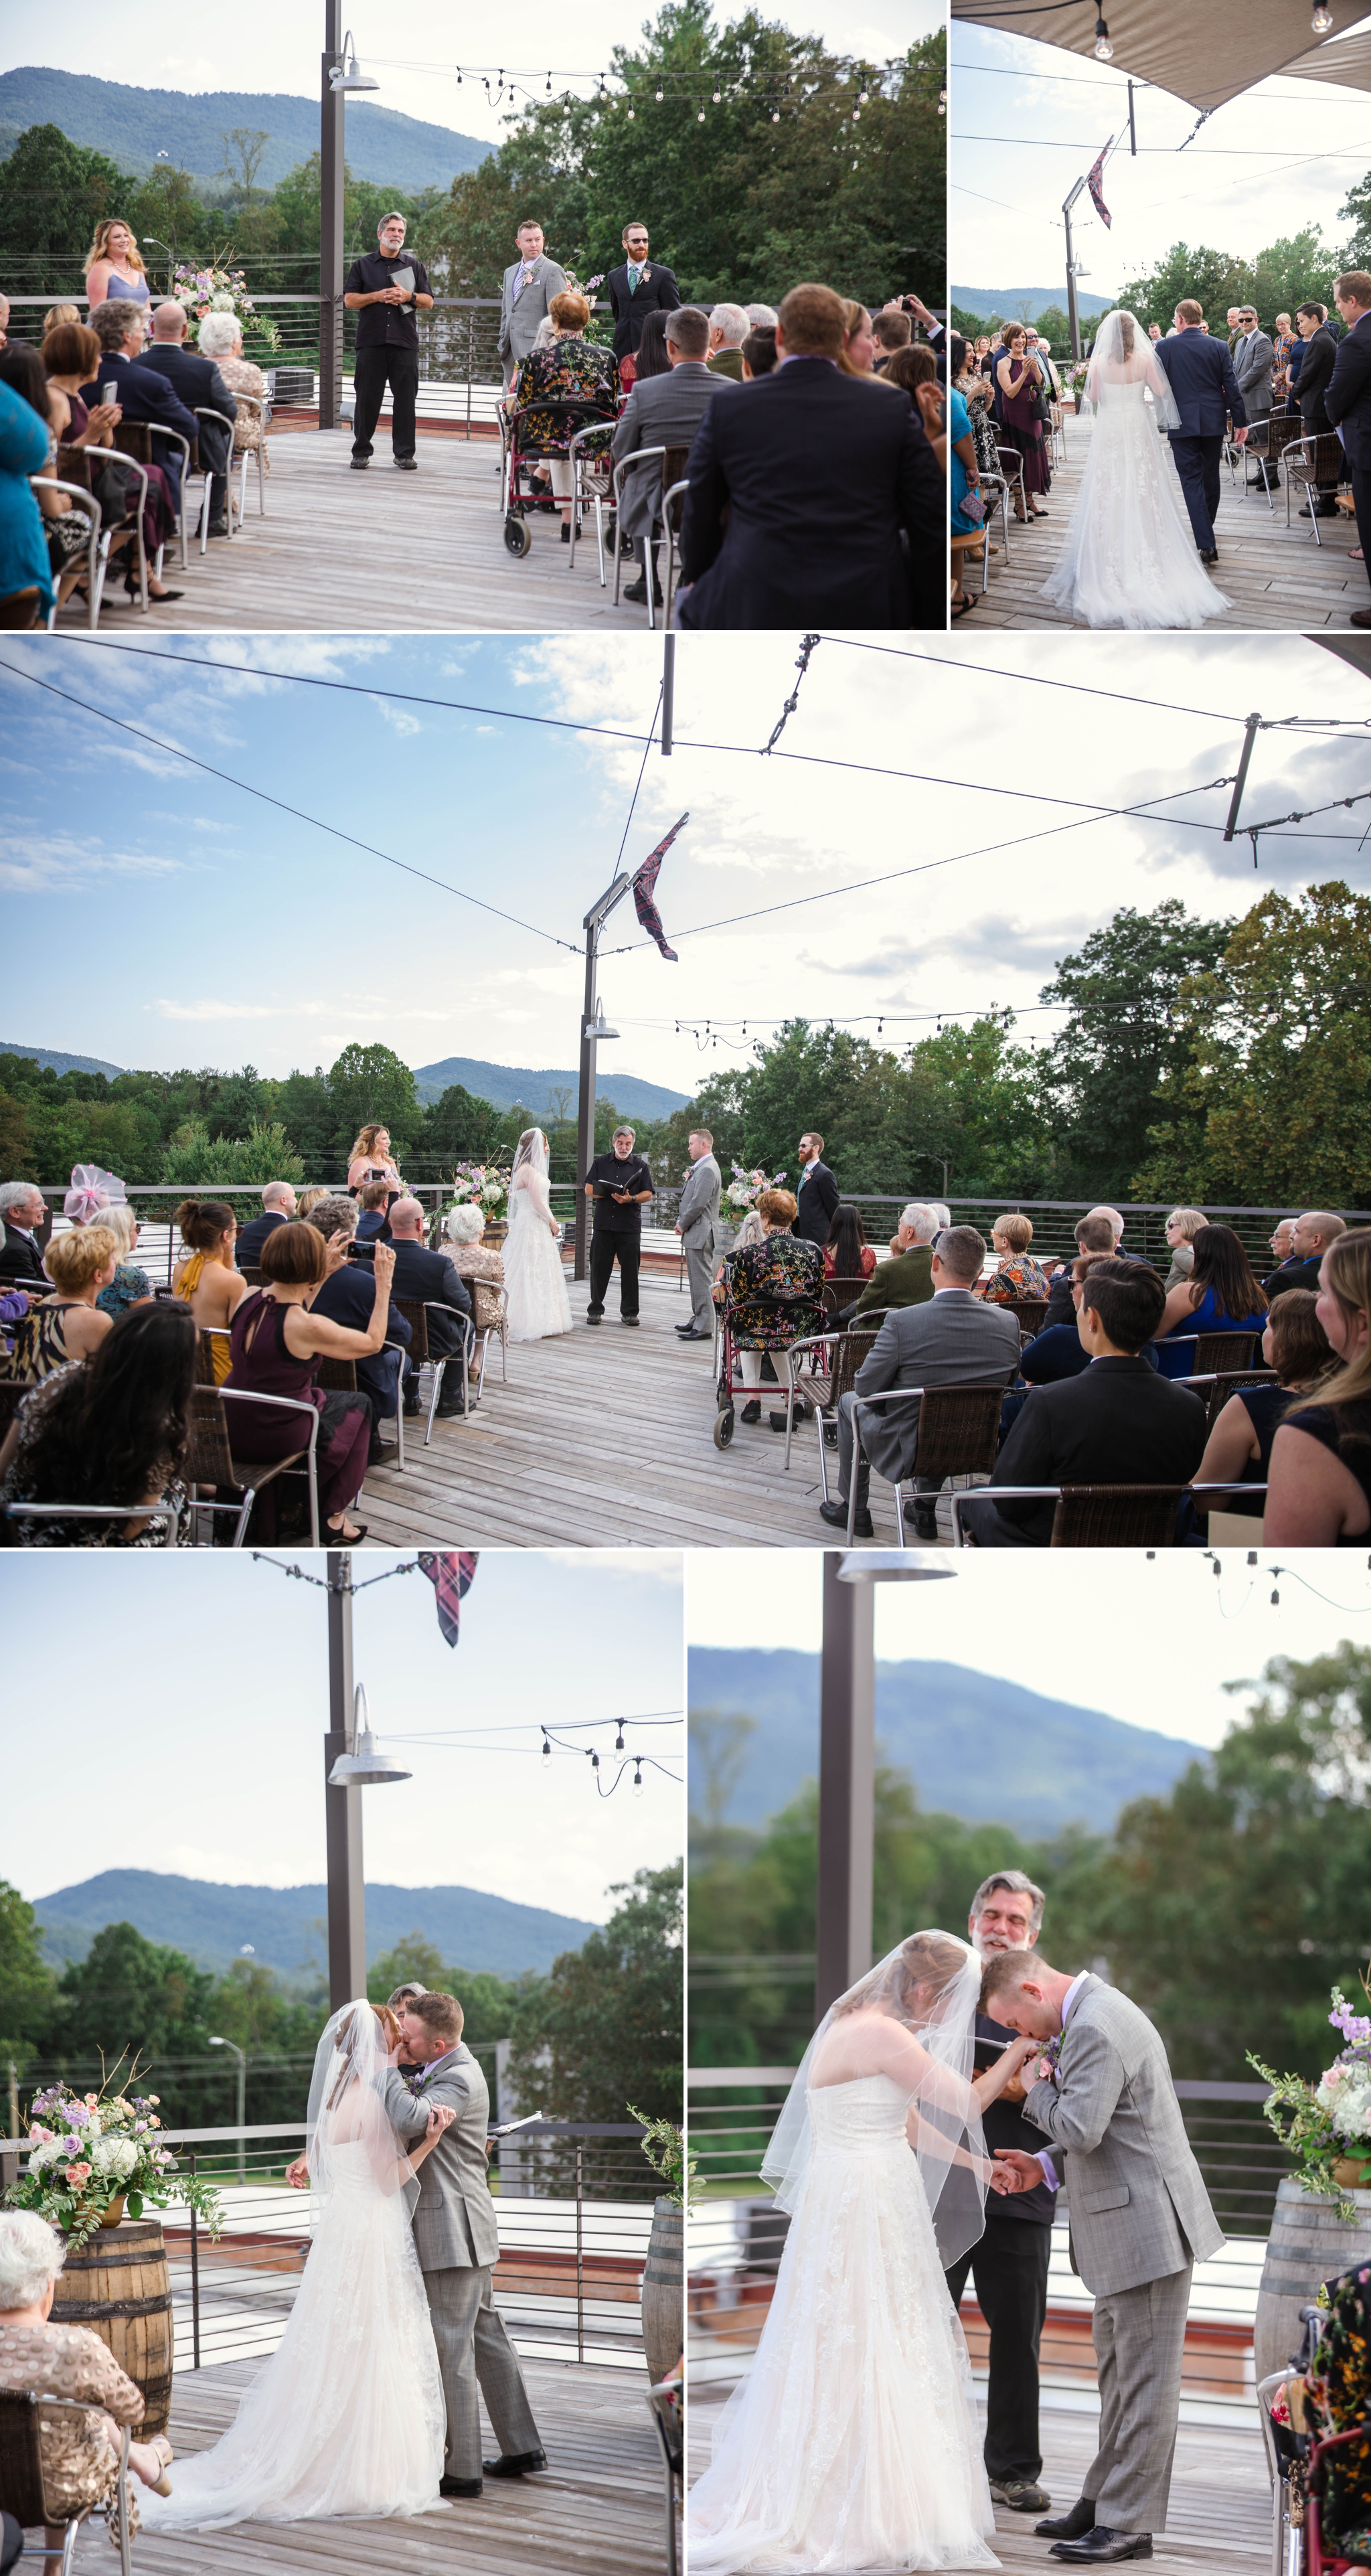 Katie + Adamn - Wedding Photography at the Highland Brewing Company in Asheville North Carolina - Johanna Dye Photographer